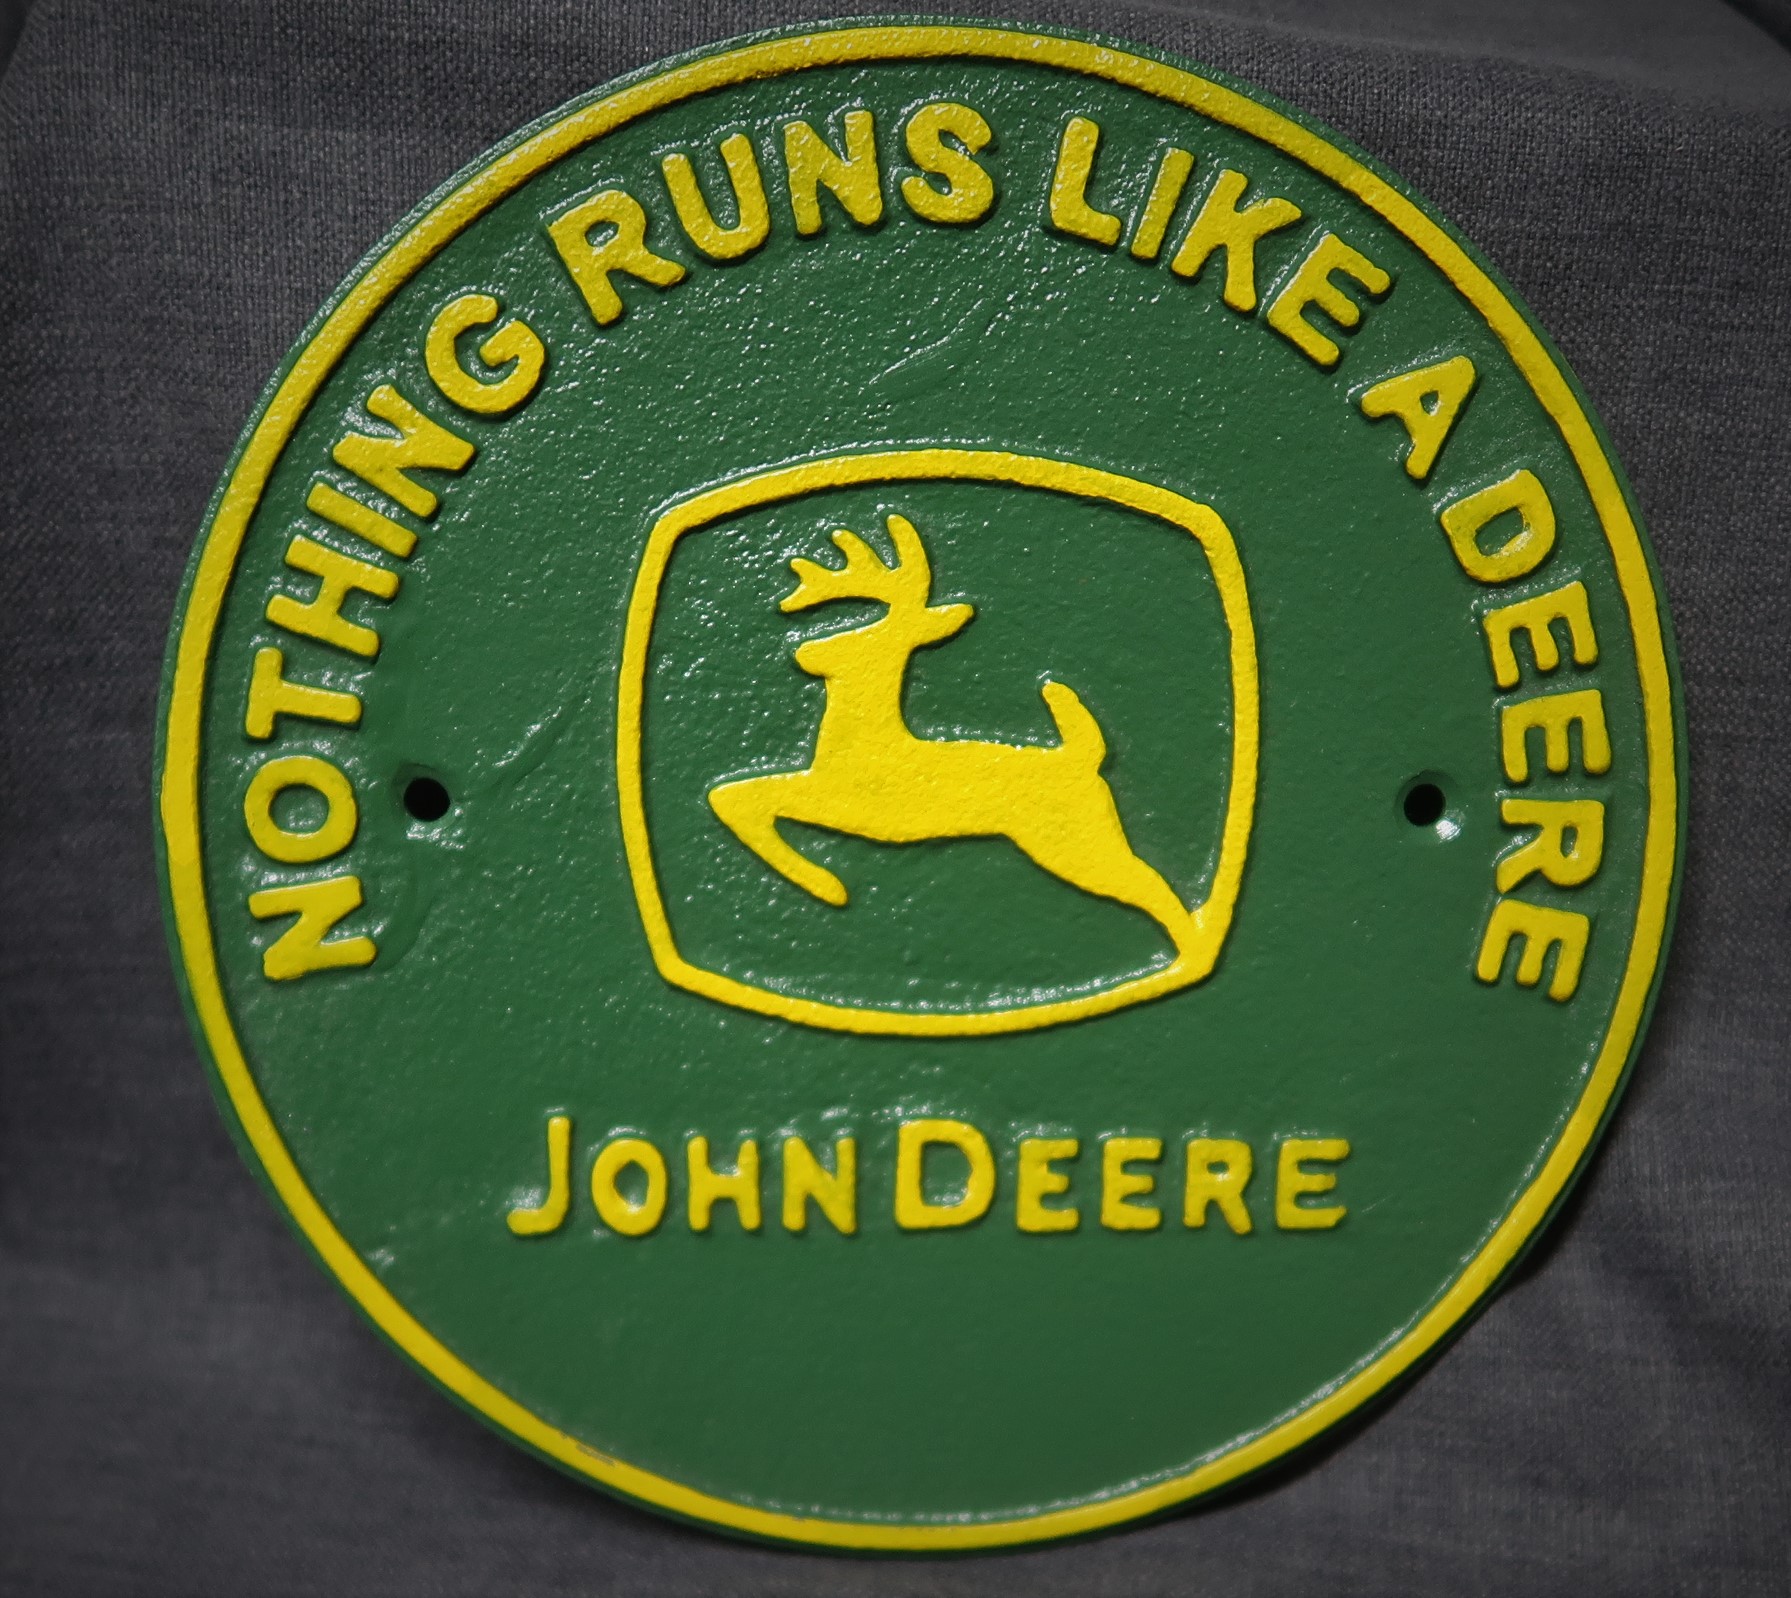 Cast iron John Derre sign